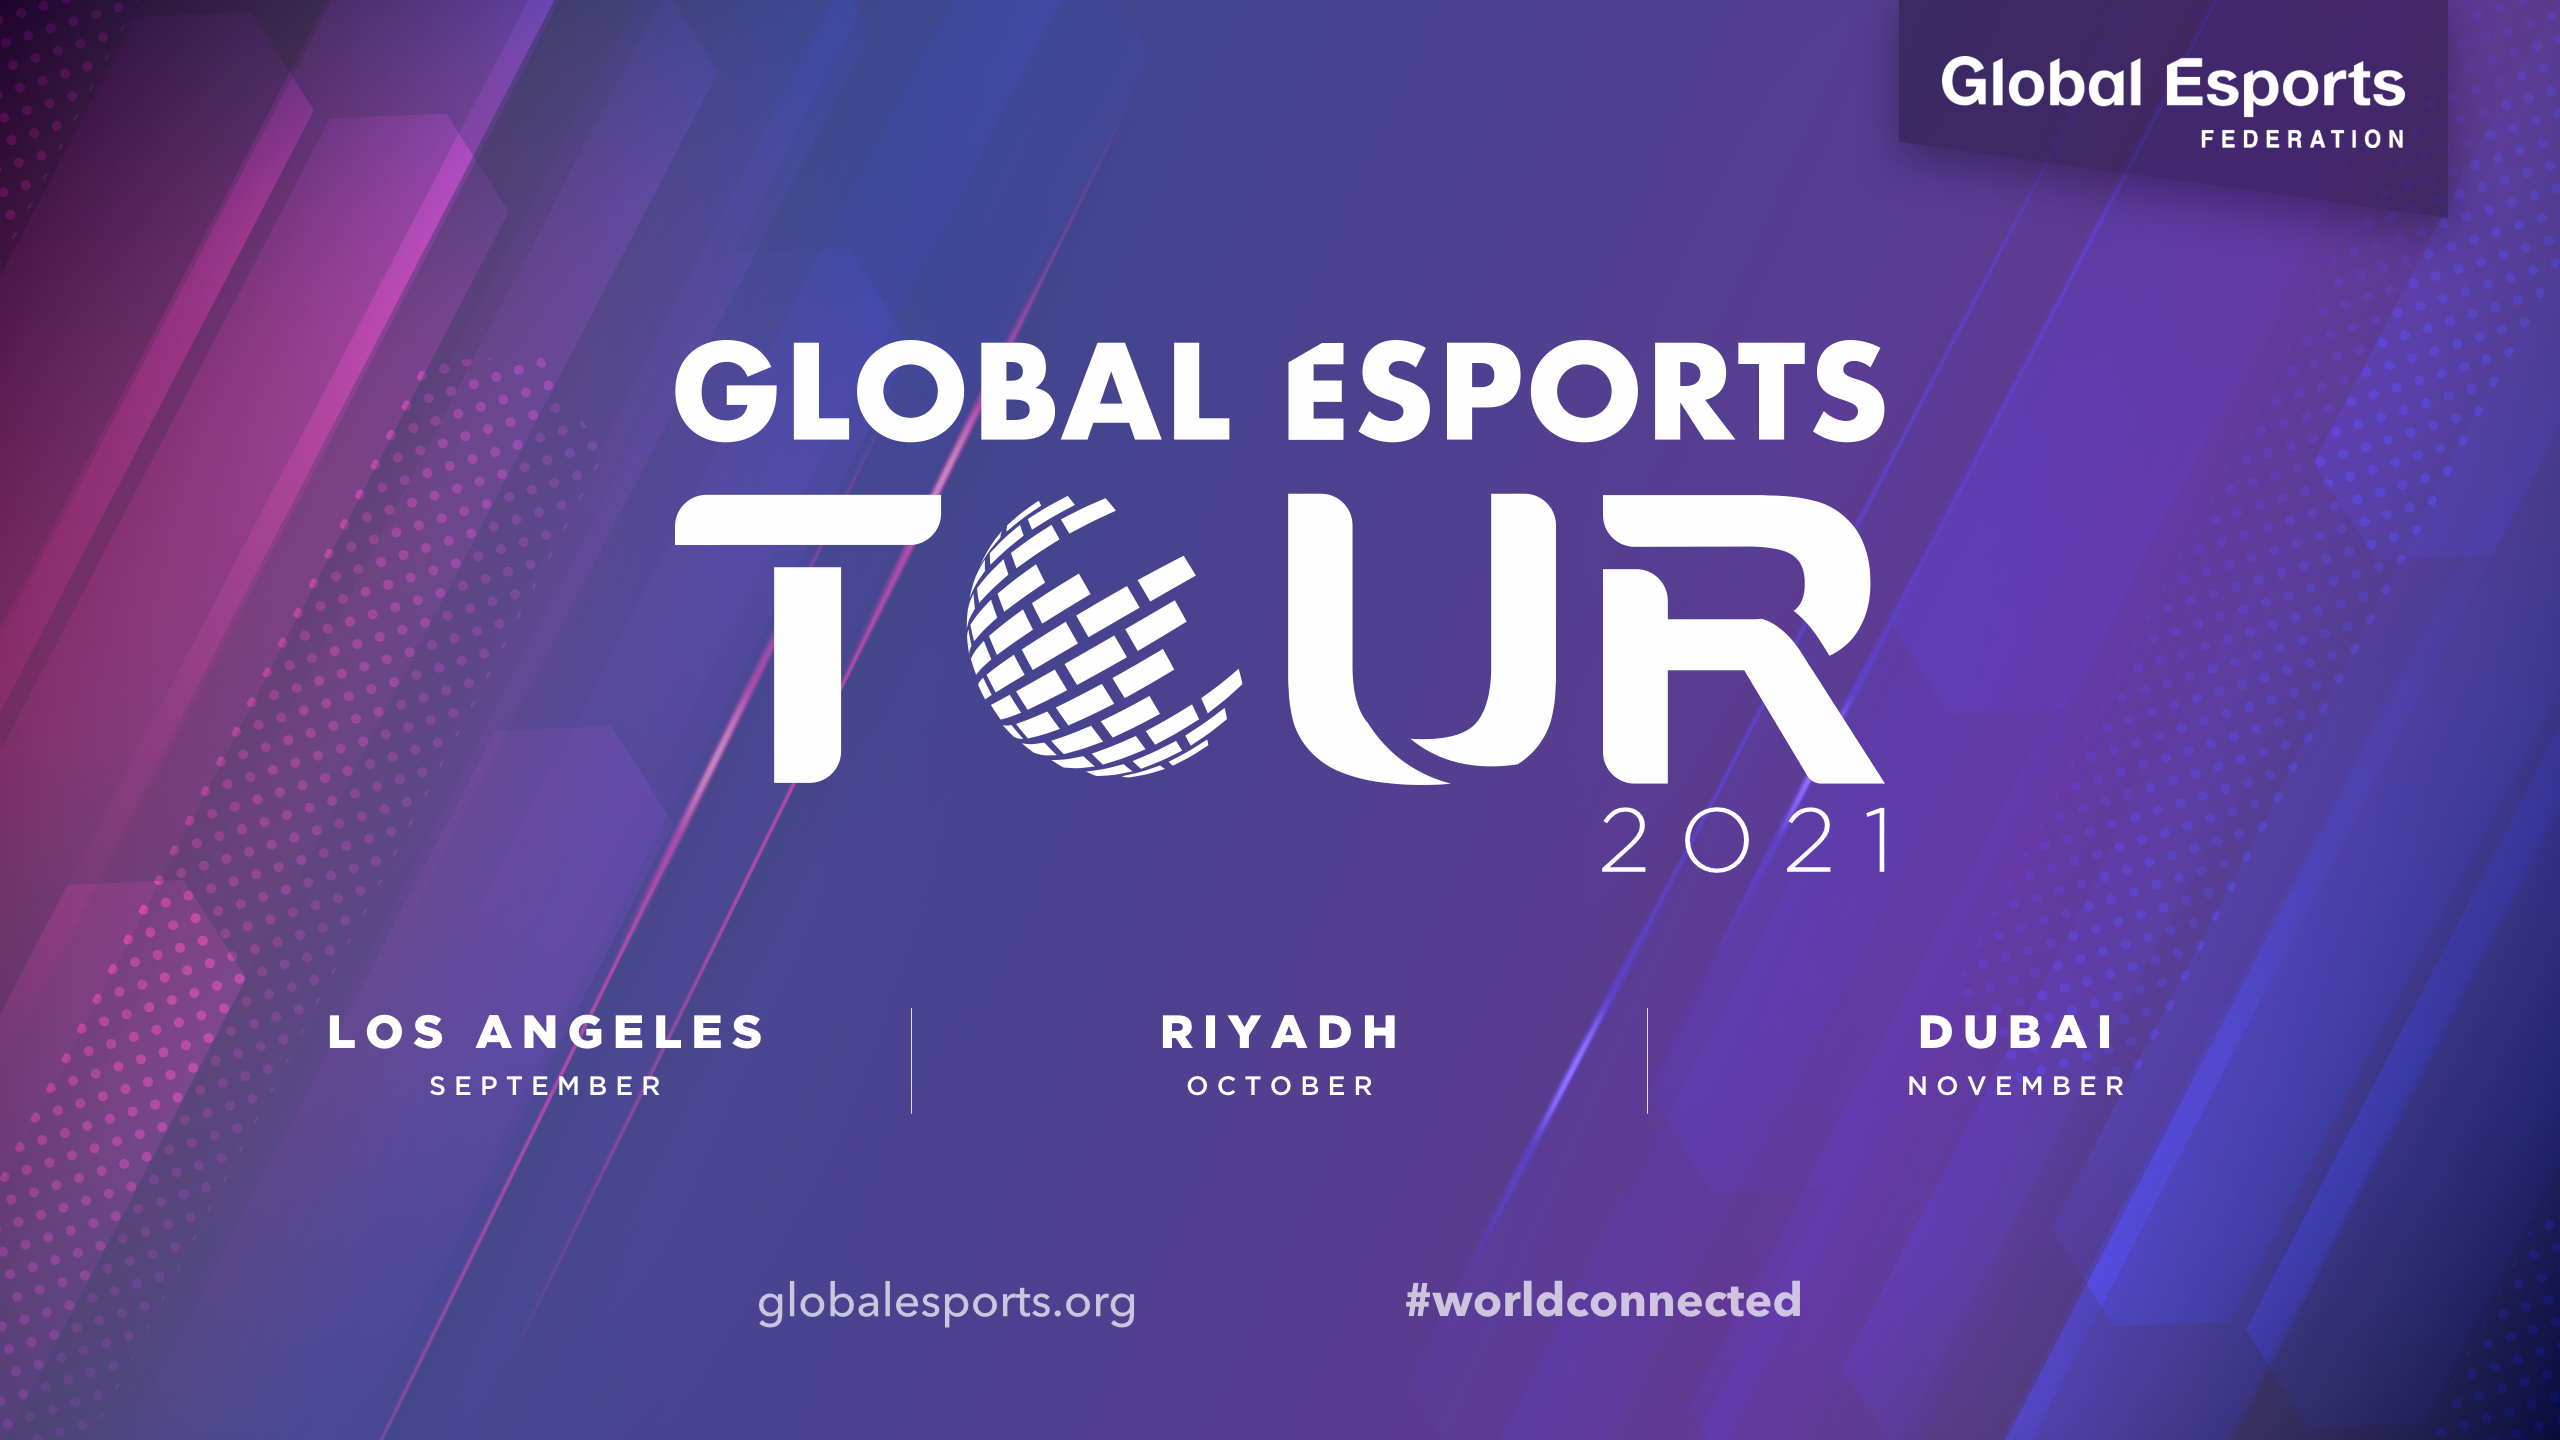 GlobalEsports